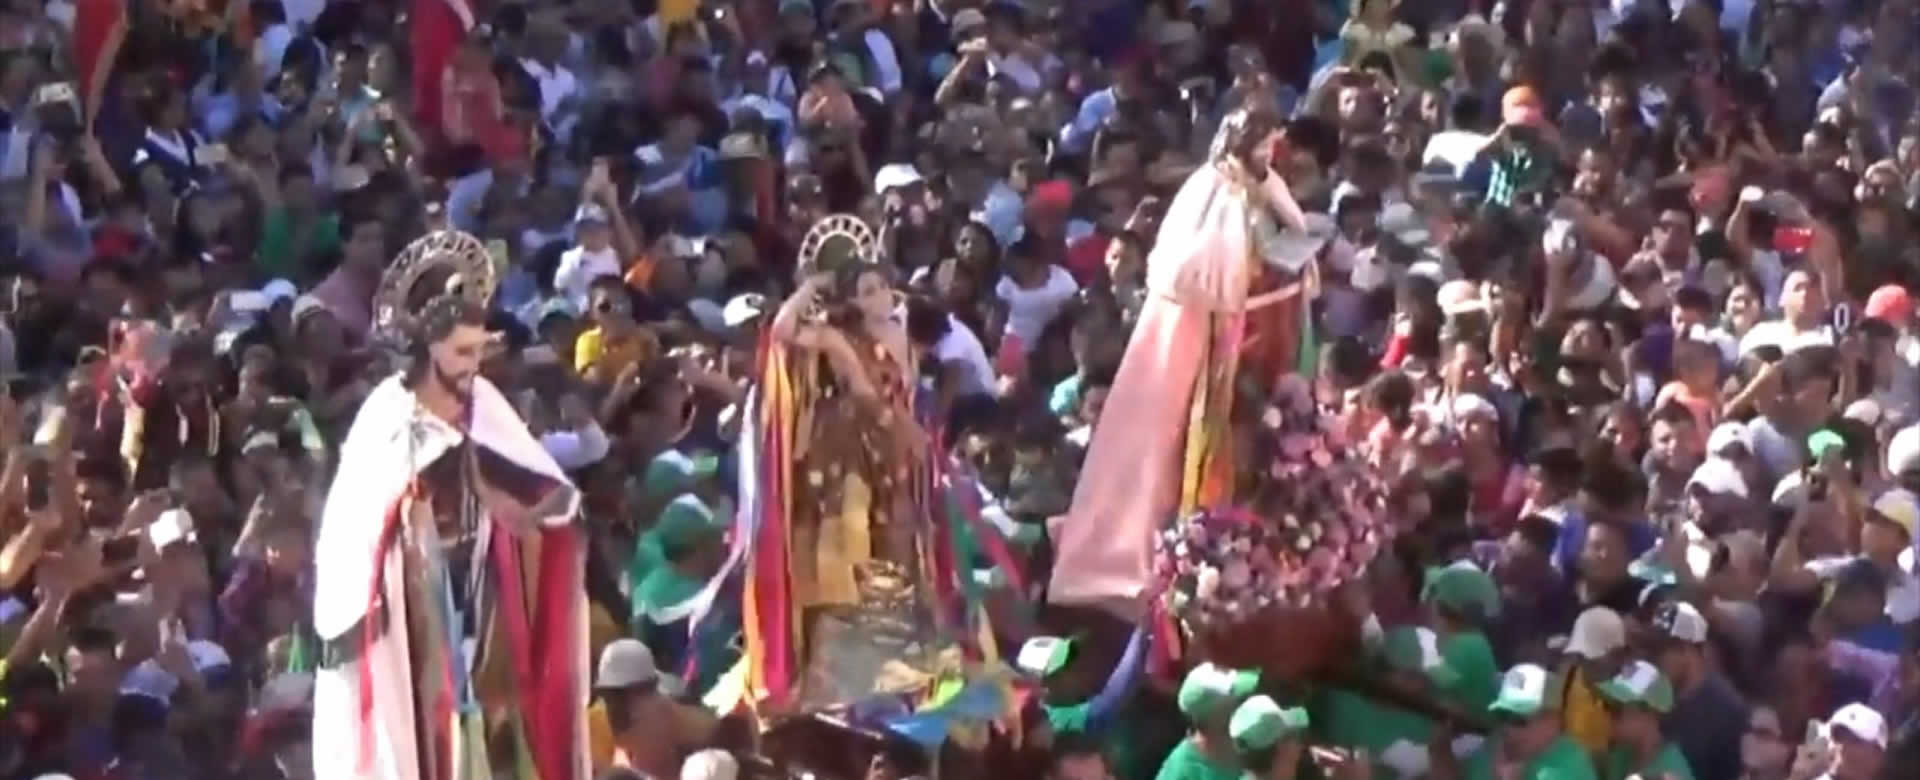 Con tradicional tope Carazo celebra a su santo patrono San Sebastián